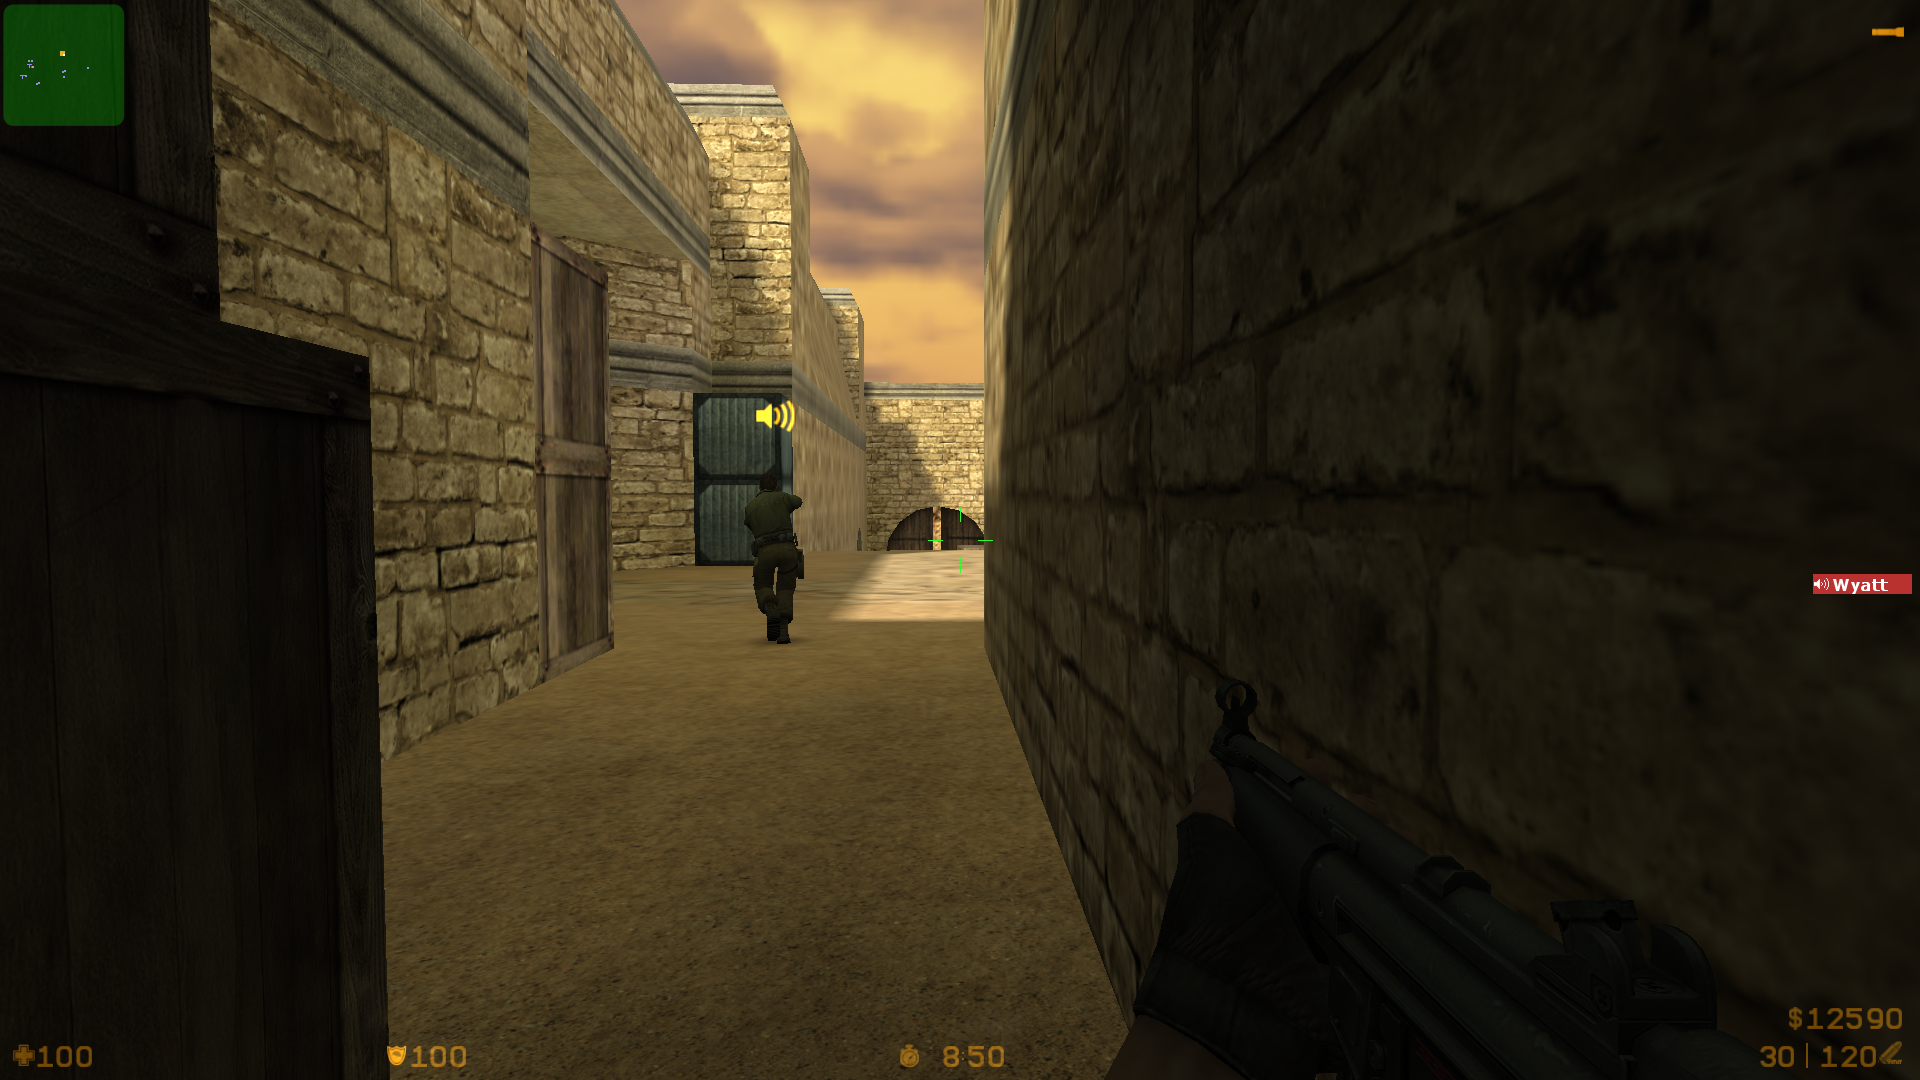 Counter-Strike: Source (2022) de_dust2 Multiplayer Gameplay 